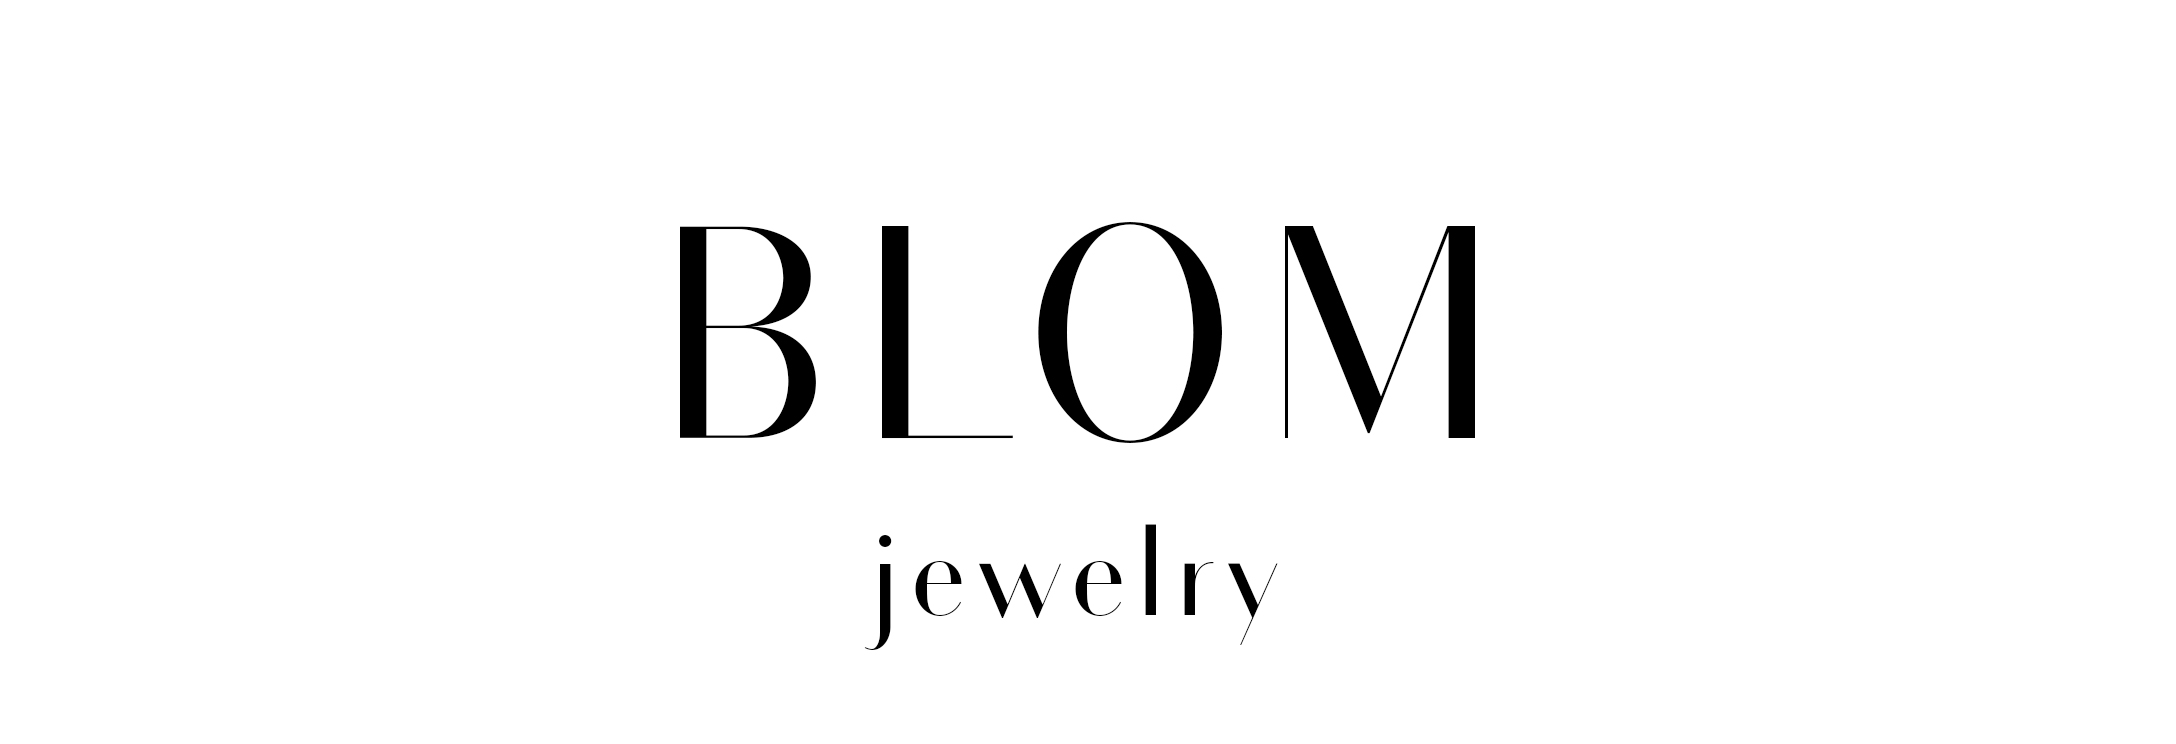 Blom jewelry